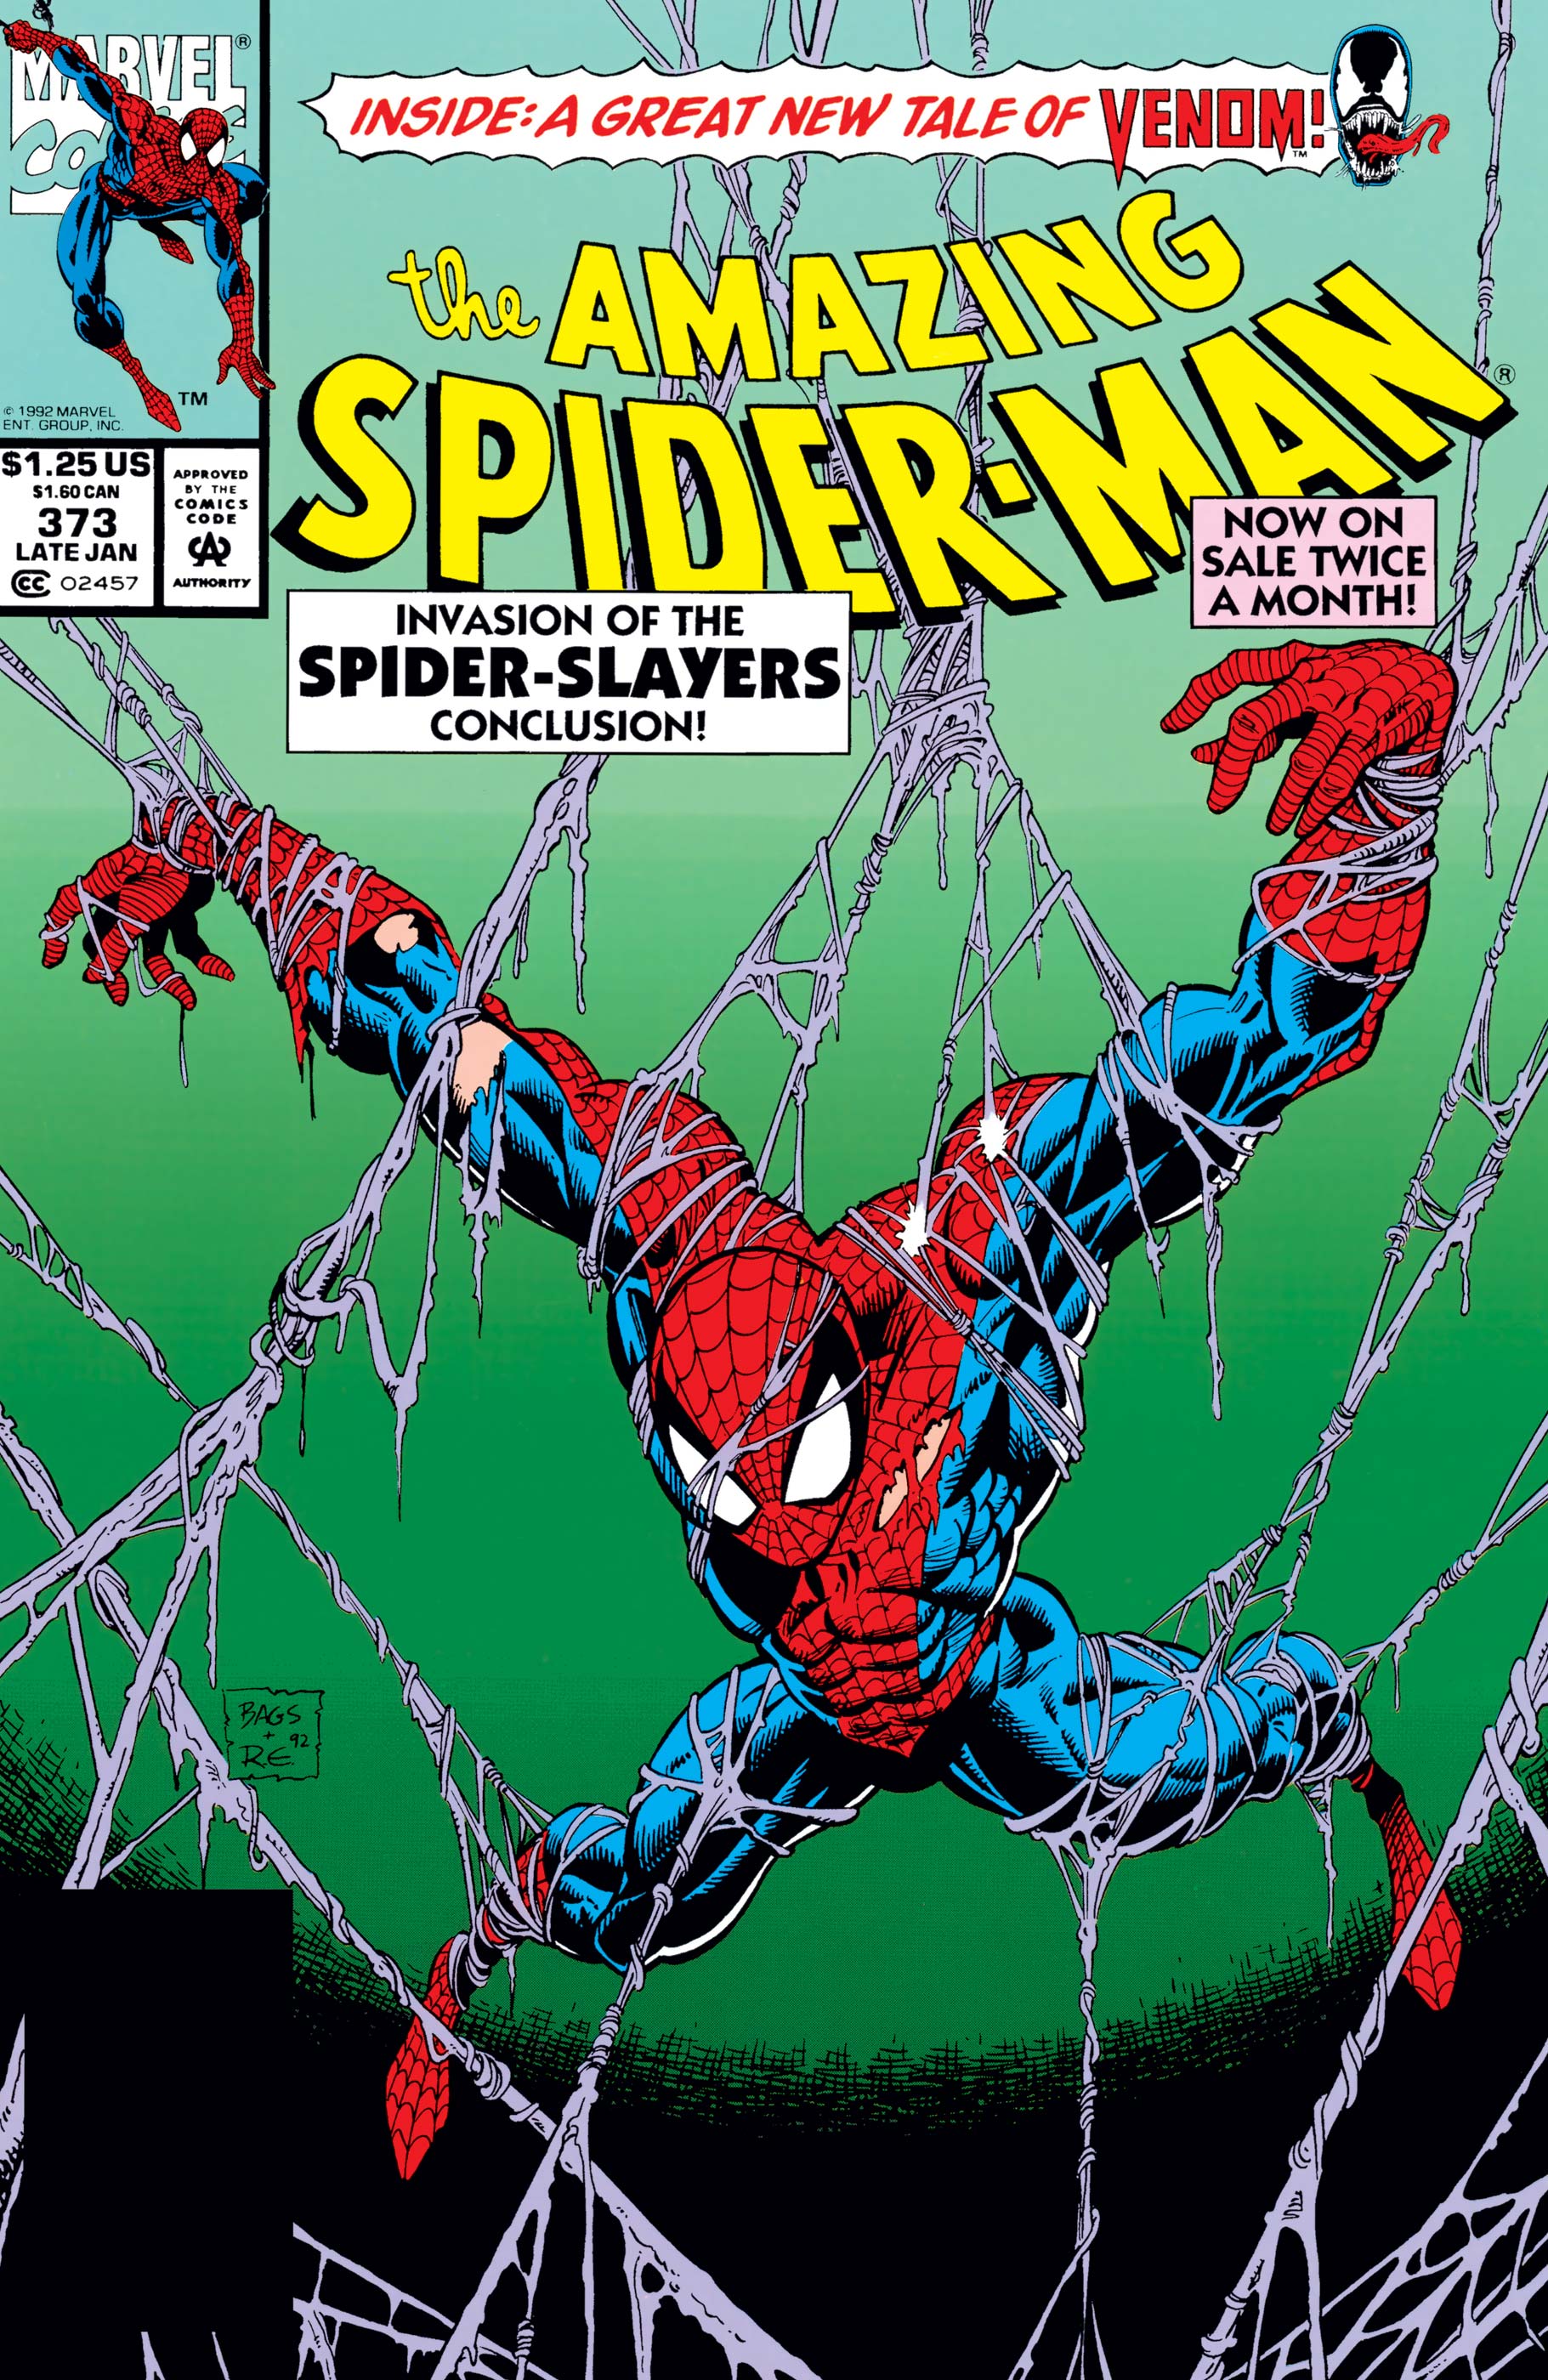 The Amazing Spider-Man (1963) #373